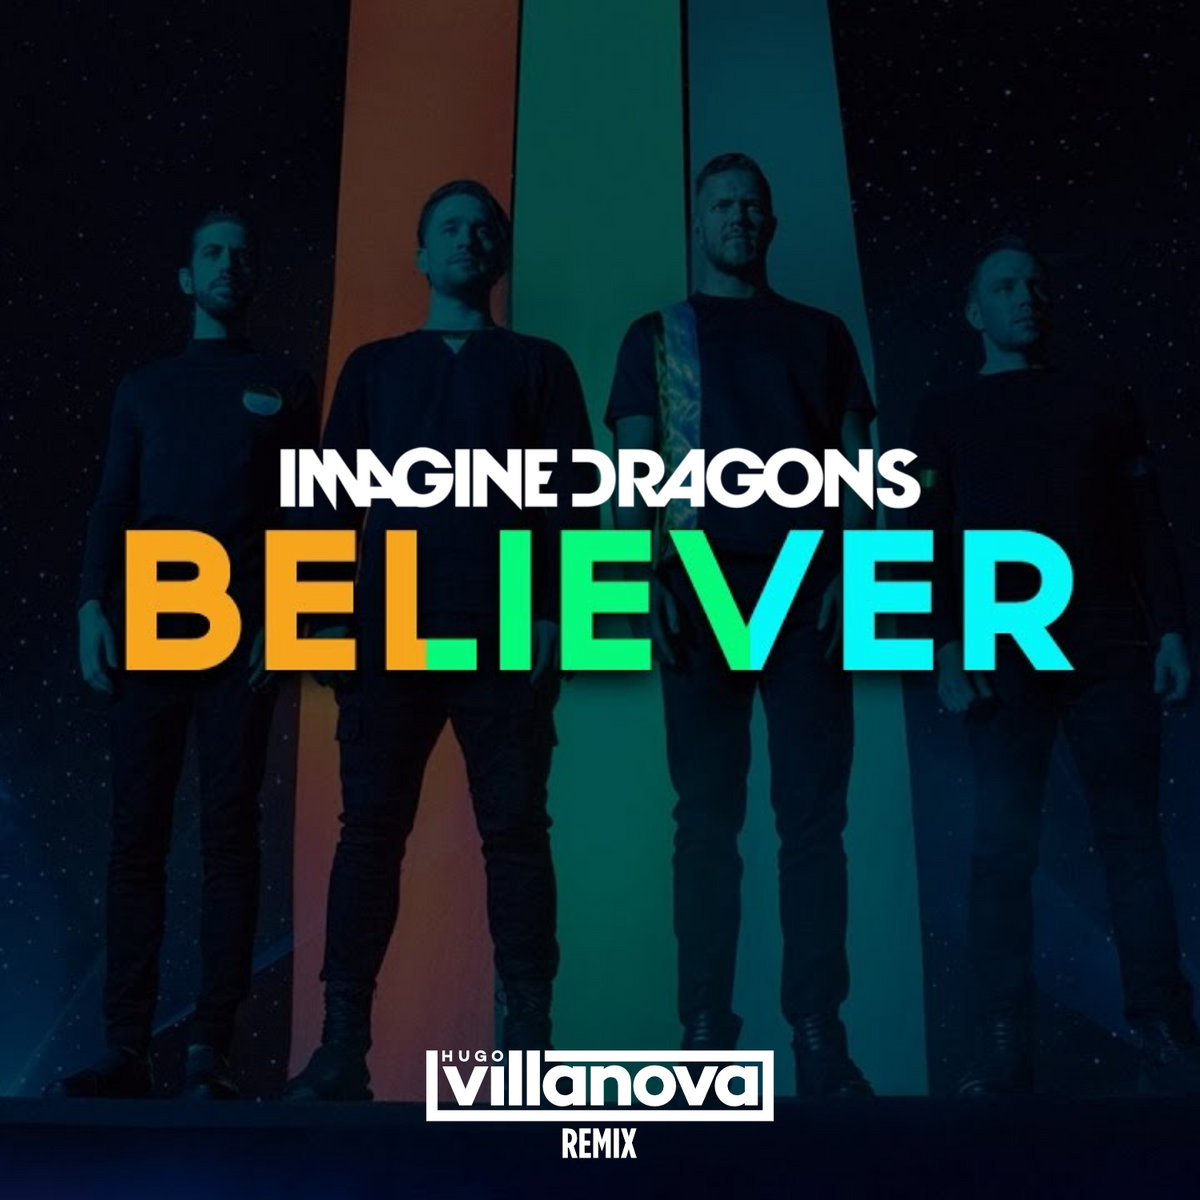 Imagine Dragons - Believer (Hugo Villanova Remix) | Hugo Villanova